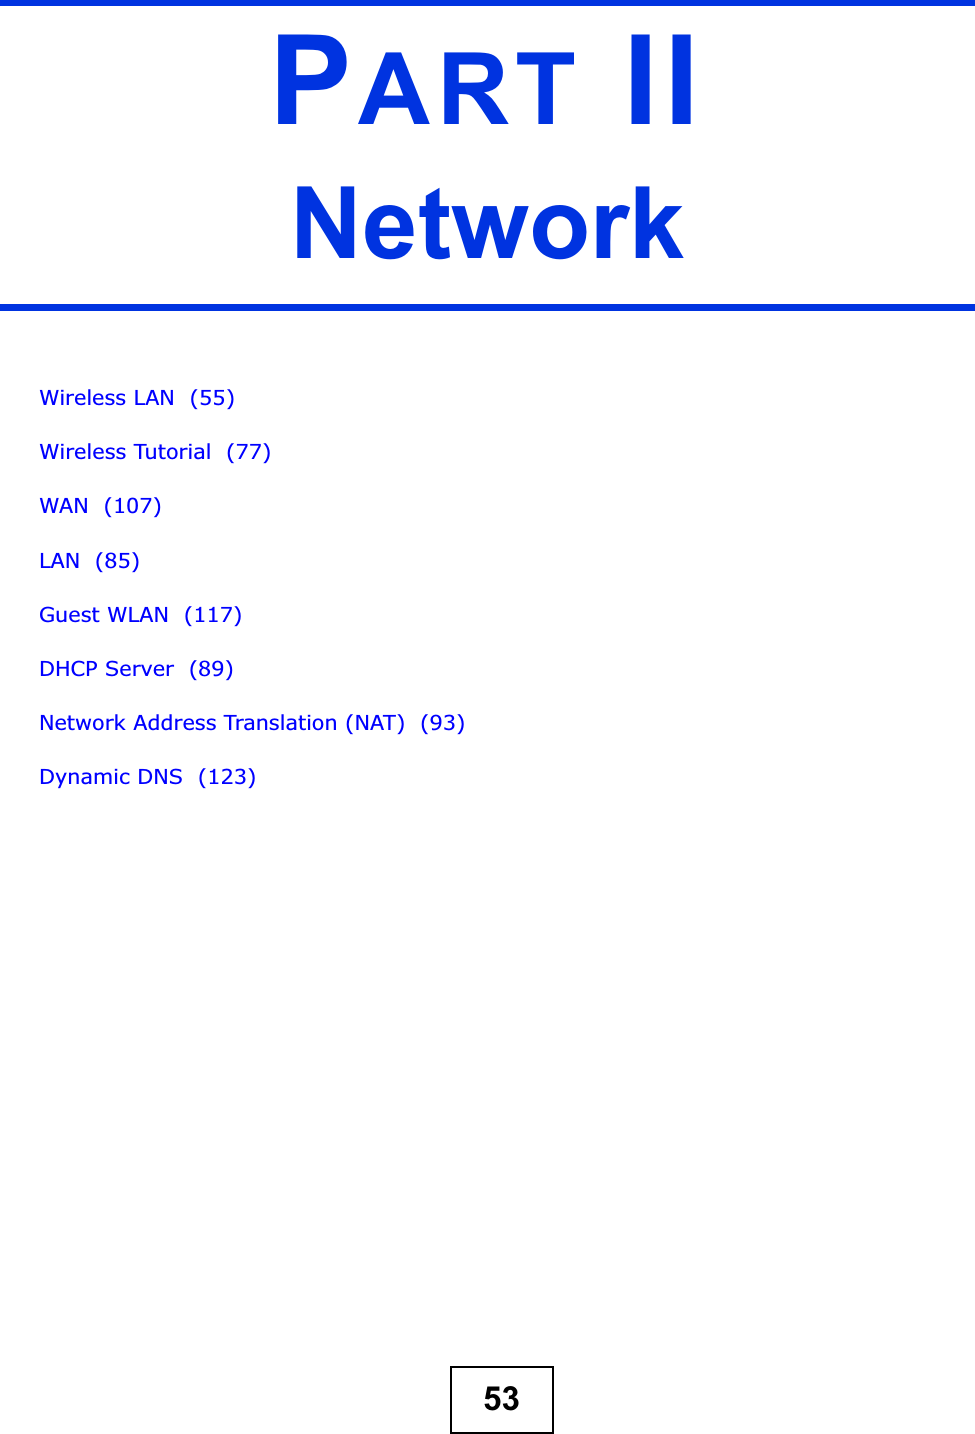 53PART IINetworkWireless LAN  (55)Wireless Tutorial  (77)WAN  (107)LAN  (85)Guest WLAN  (117)DHCP Server  (89)Network Address Translation (NAT)  (93)Dynamic DNS  (123)